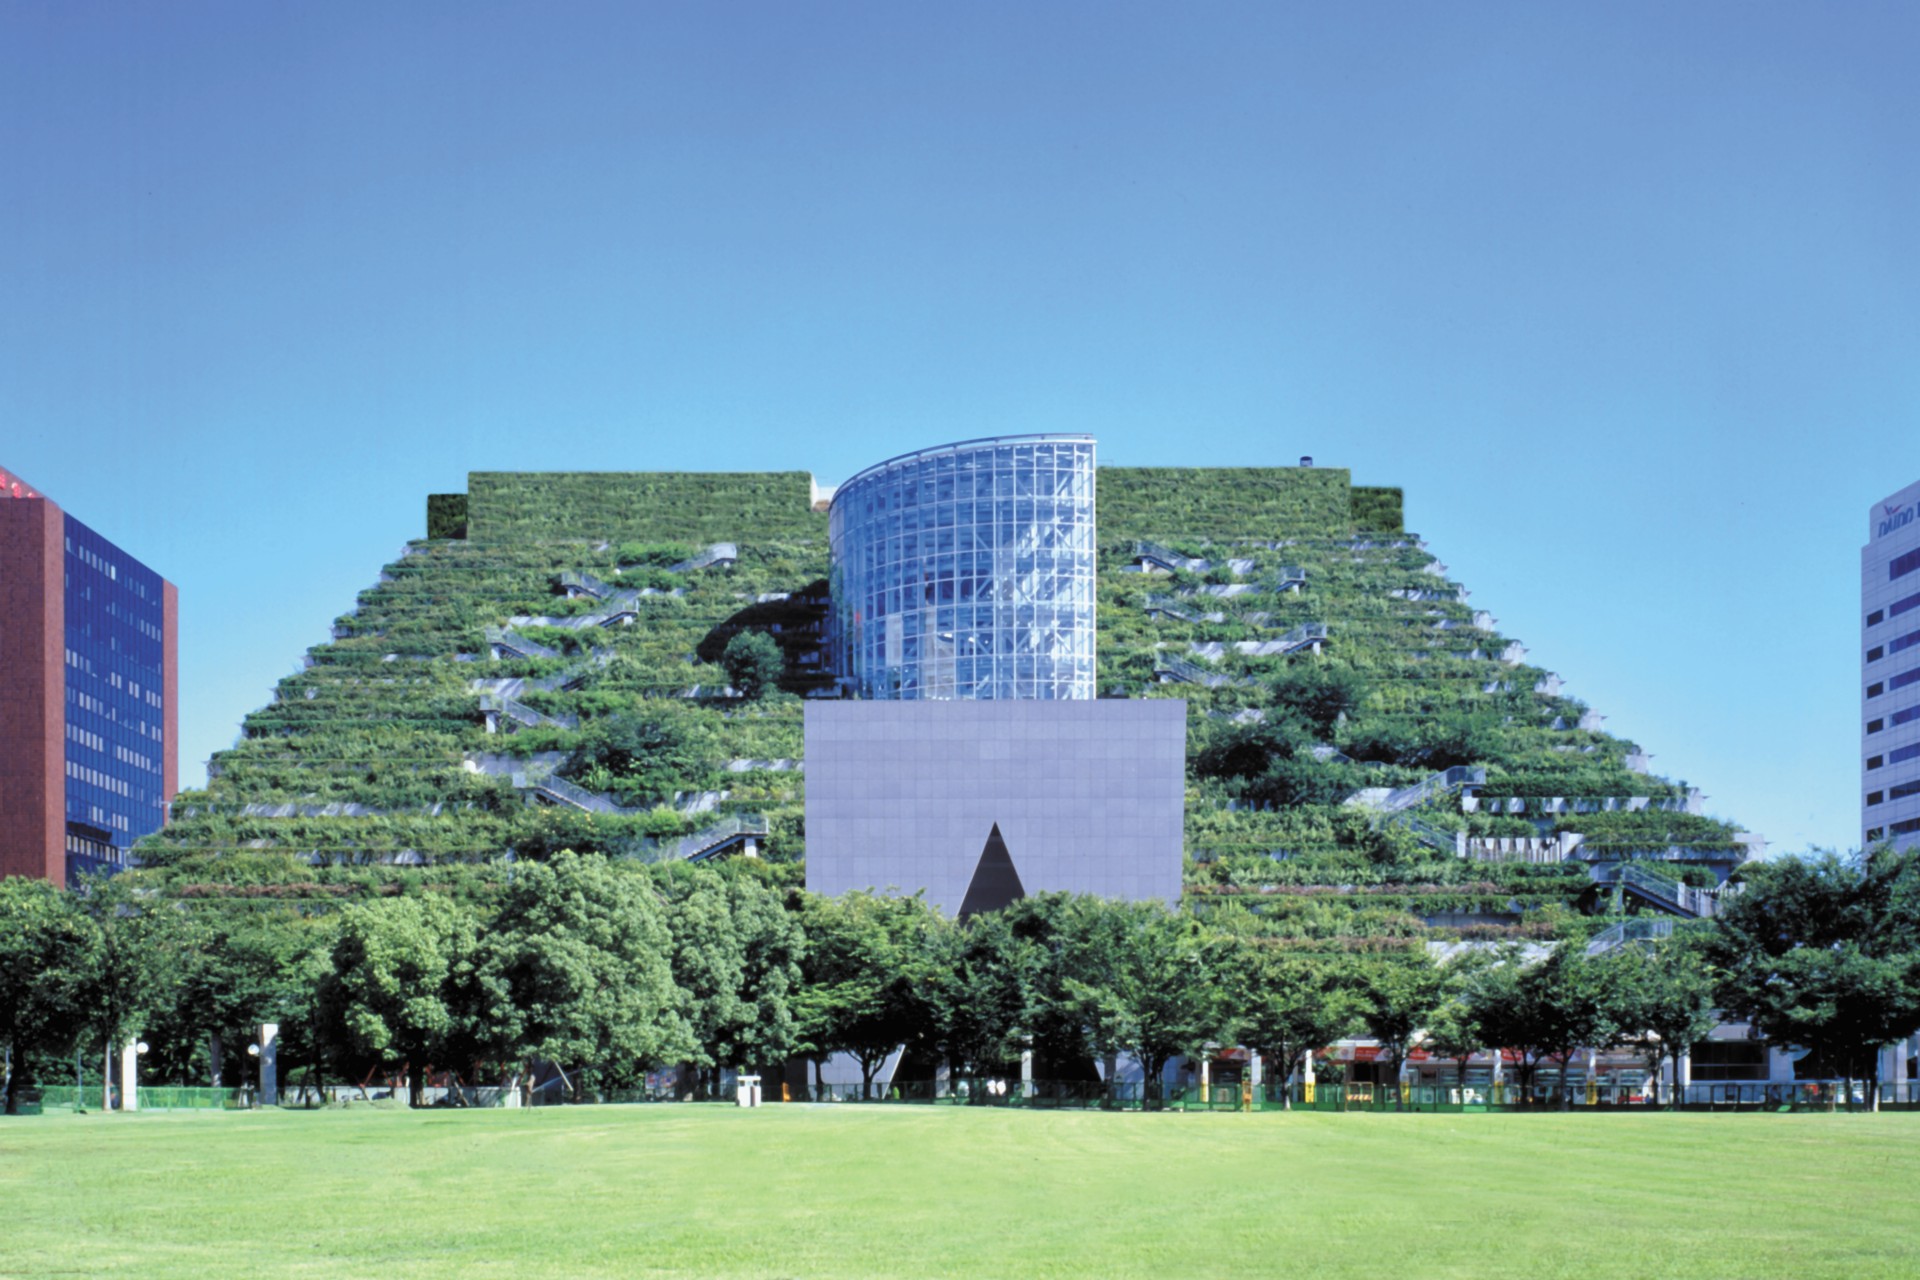 Architecture and nature: 25 years Emilio Ambasz?s ACROS centre |